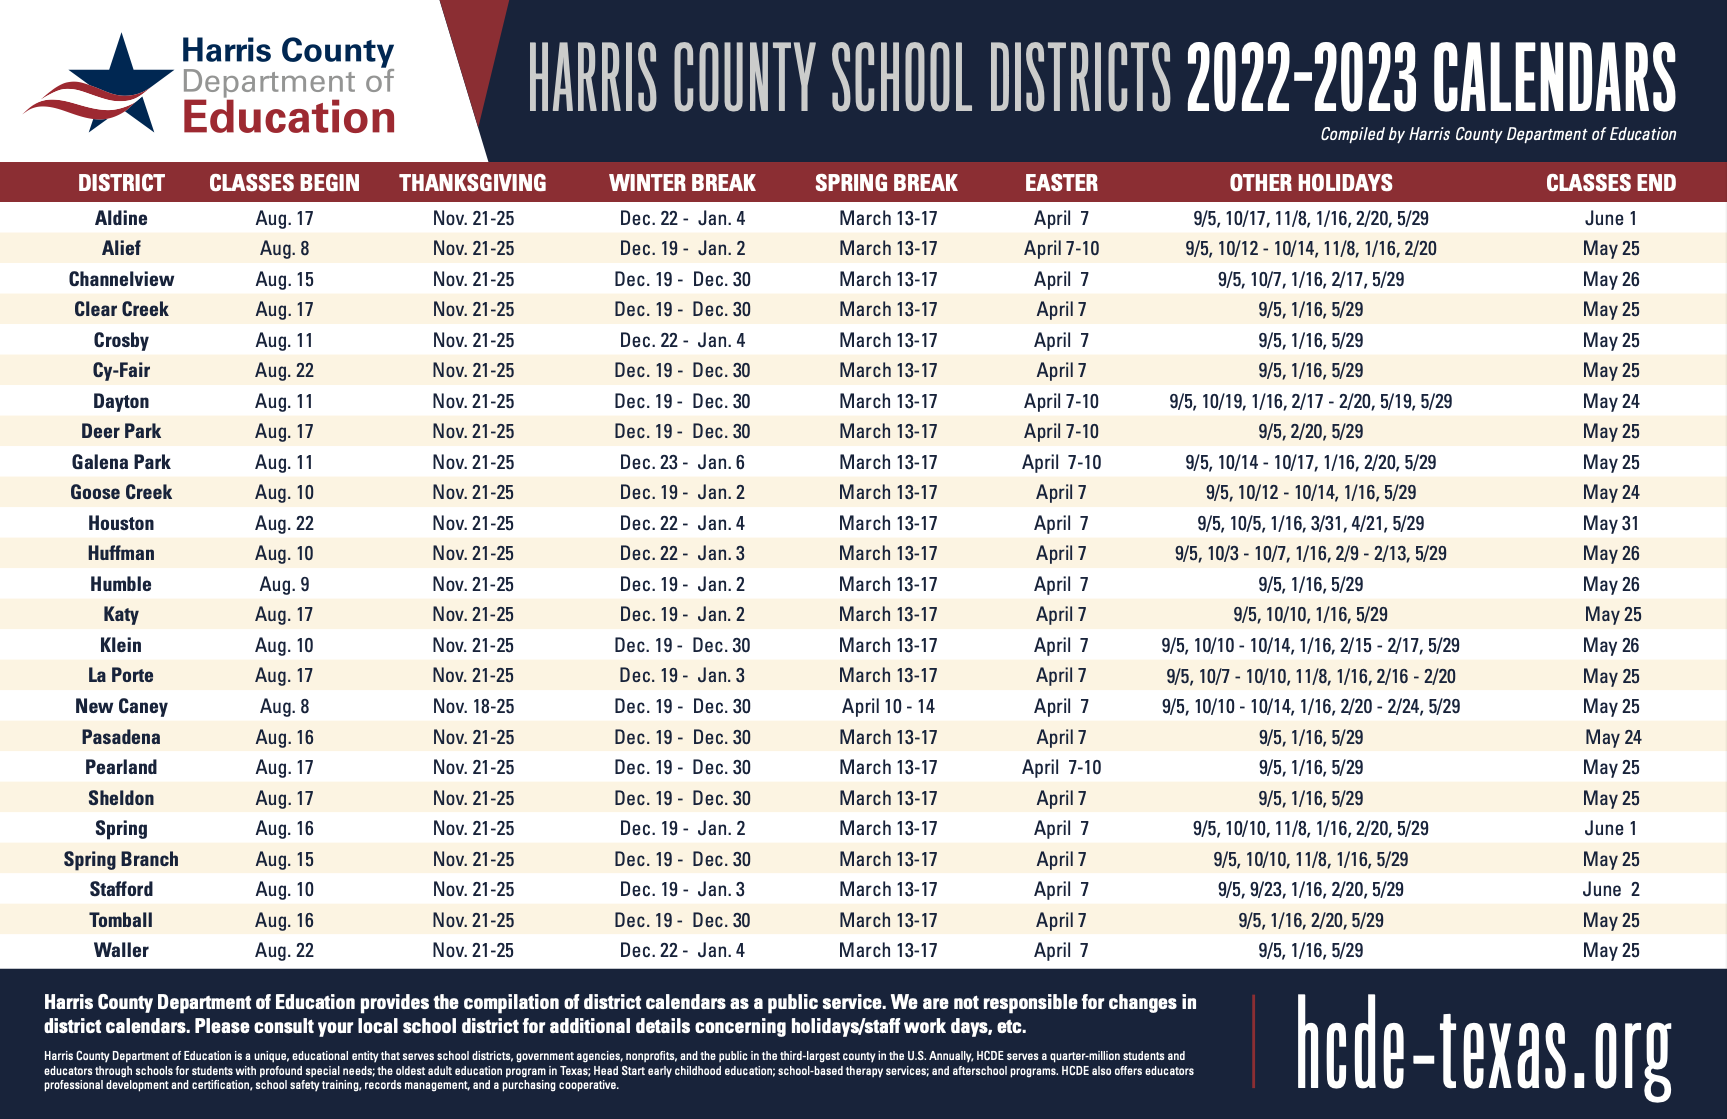 HCDE releases 20222023 comprehensive school calendar for 25 Harris